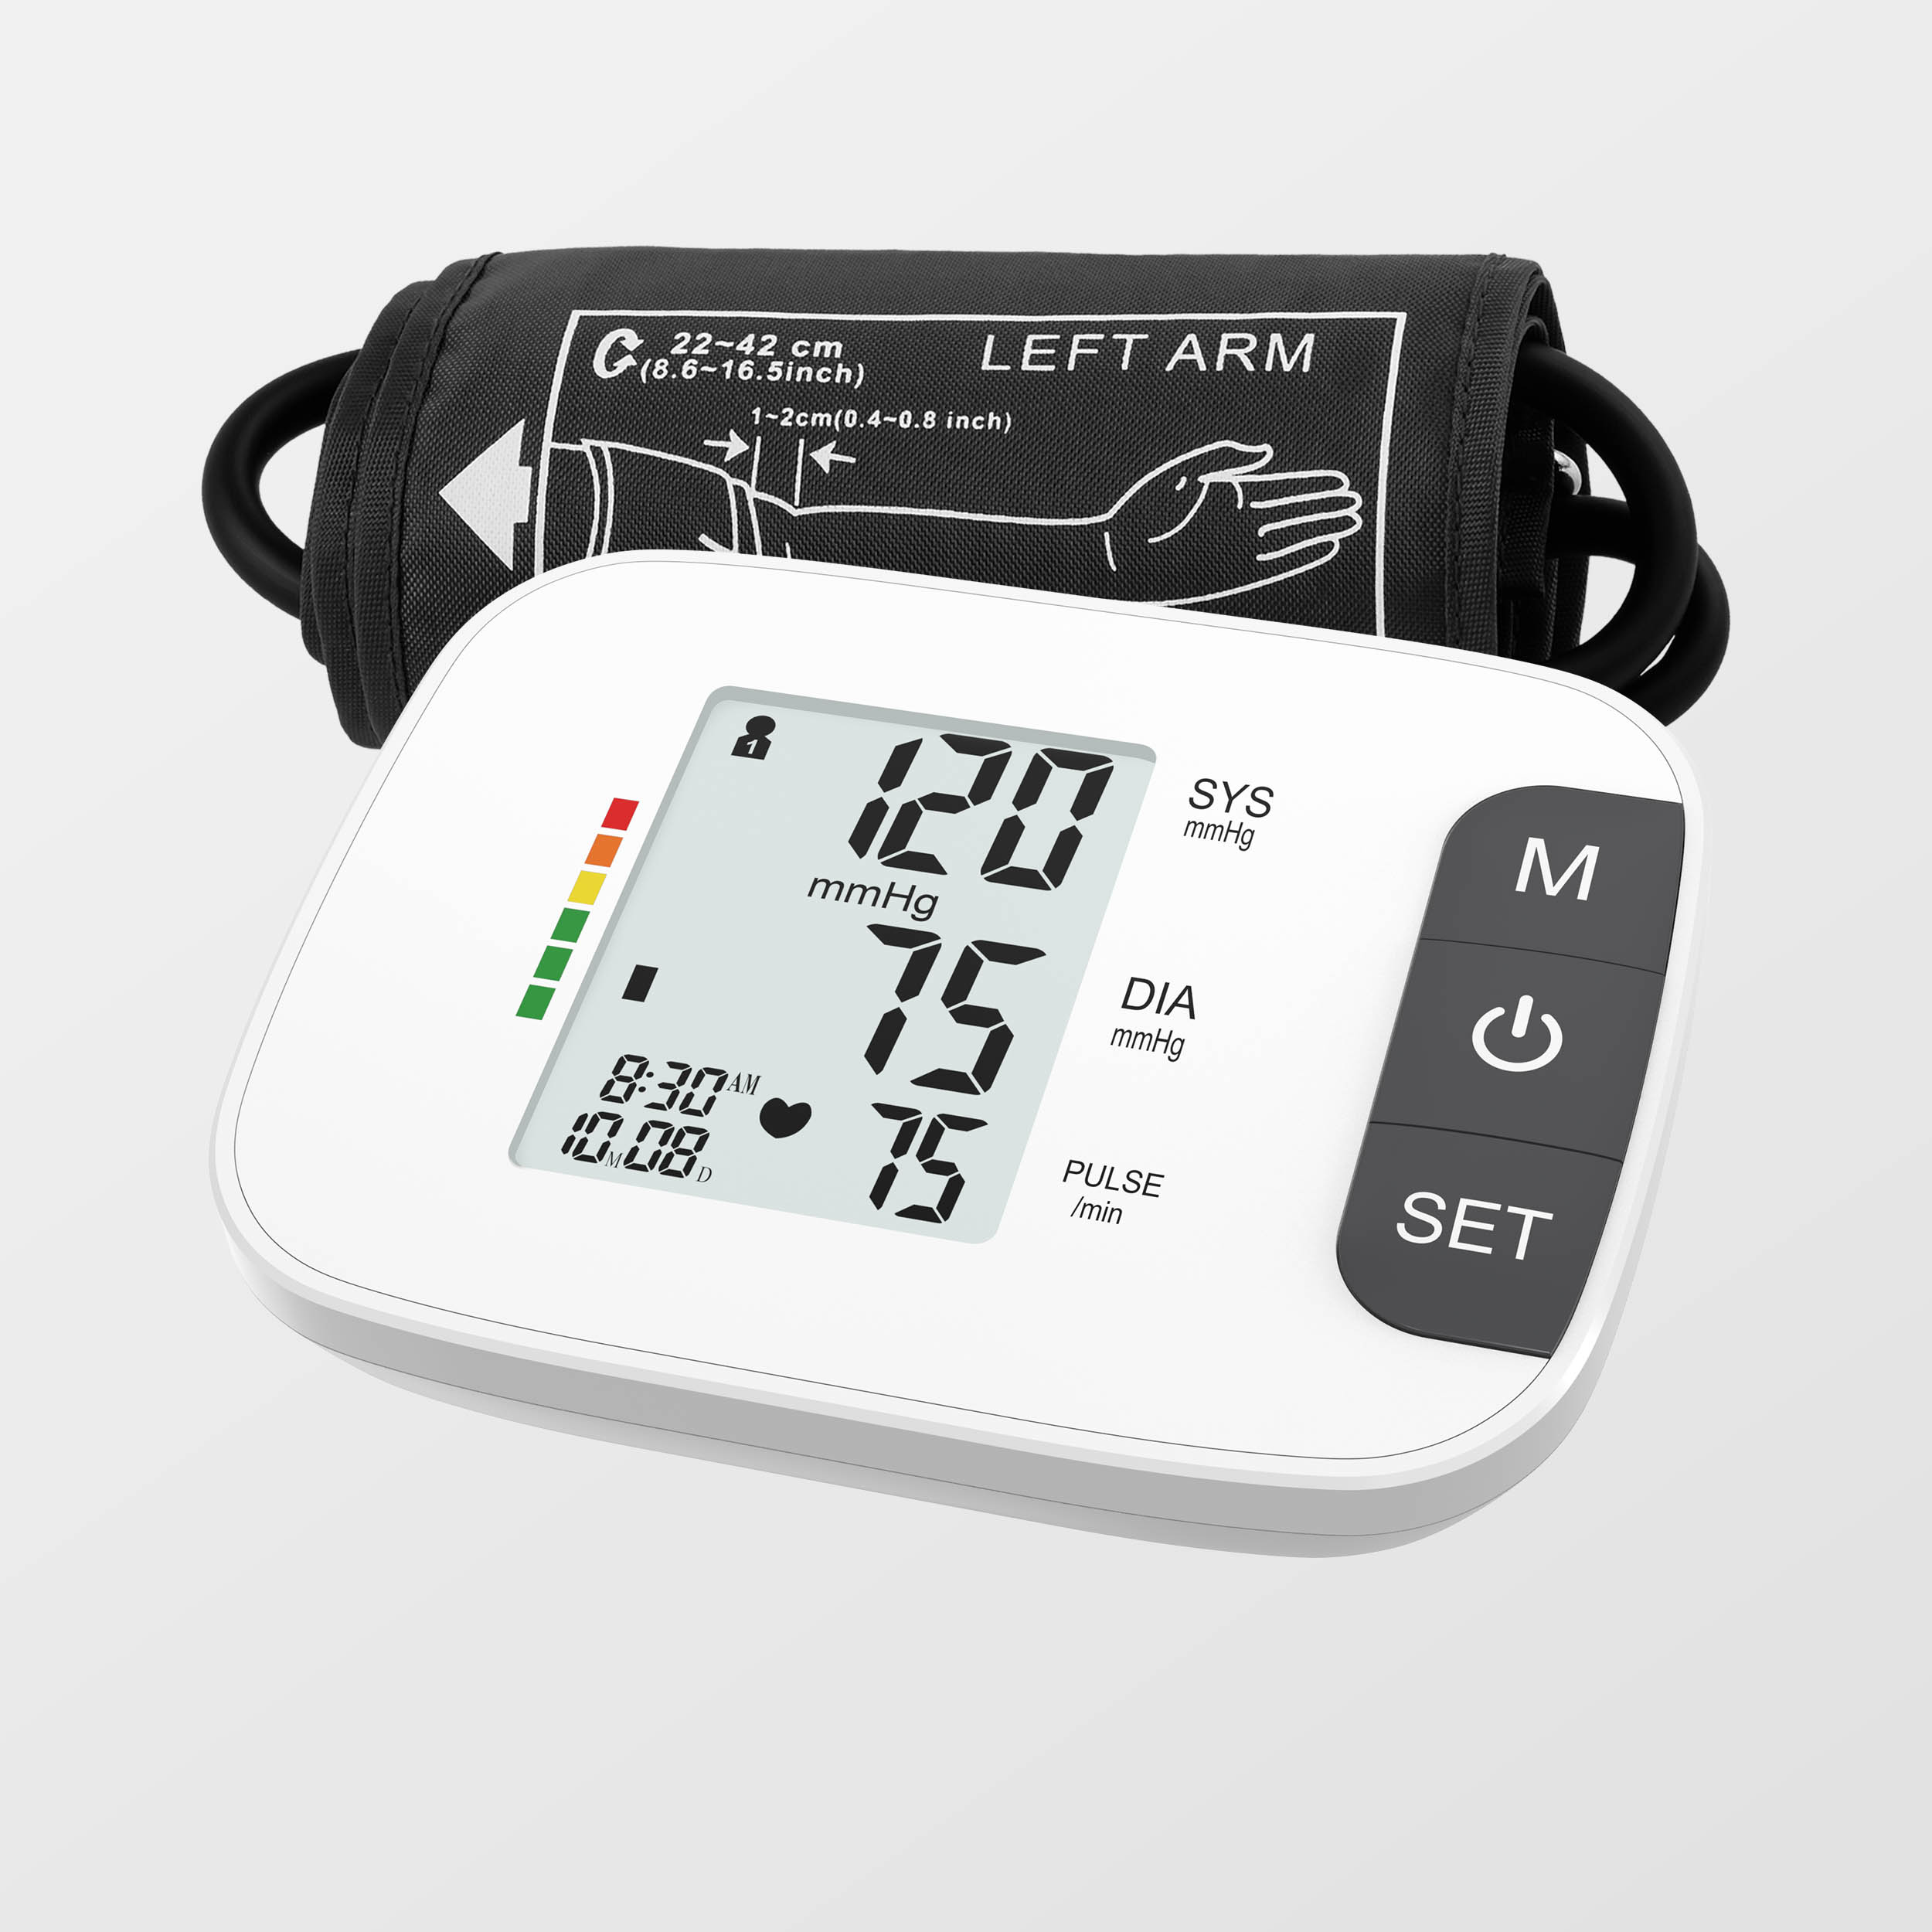 BP Méter Digital Tekanan Darah Monitor Éléktronik Upper Arm Tekanan Darah Monitor